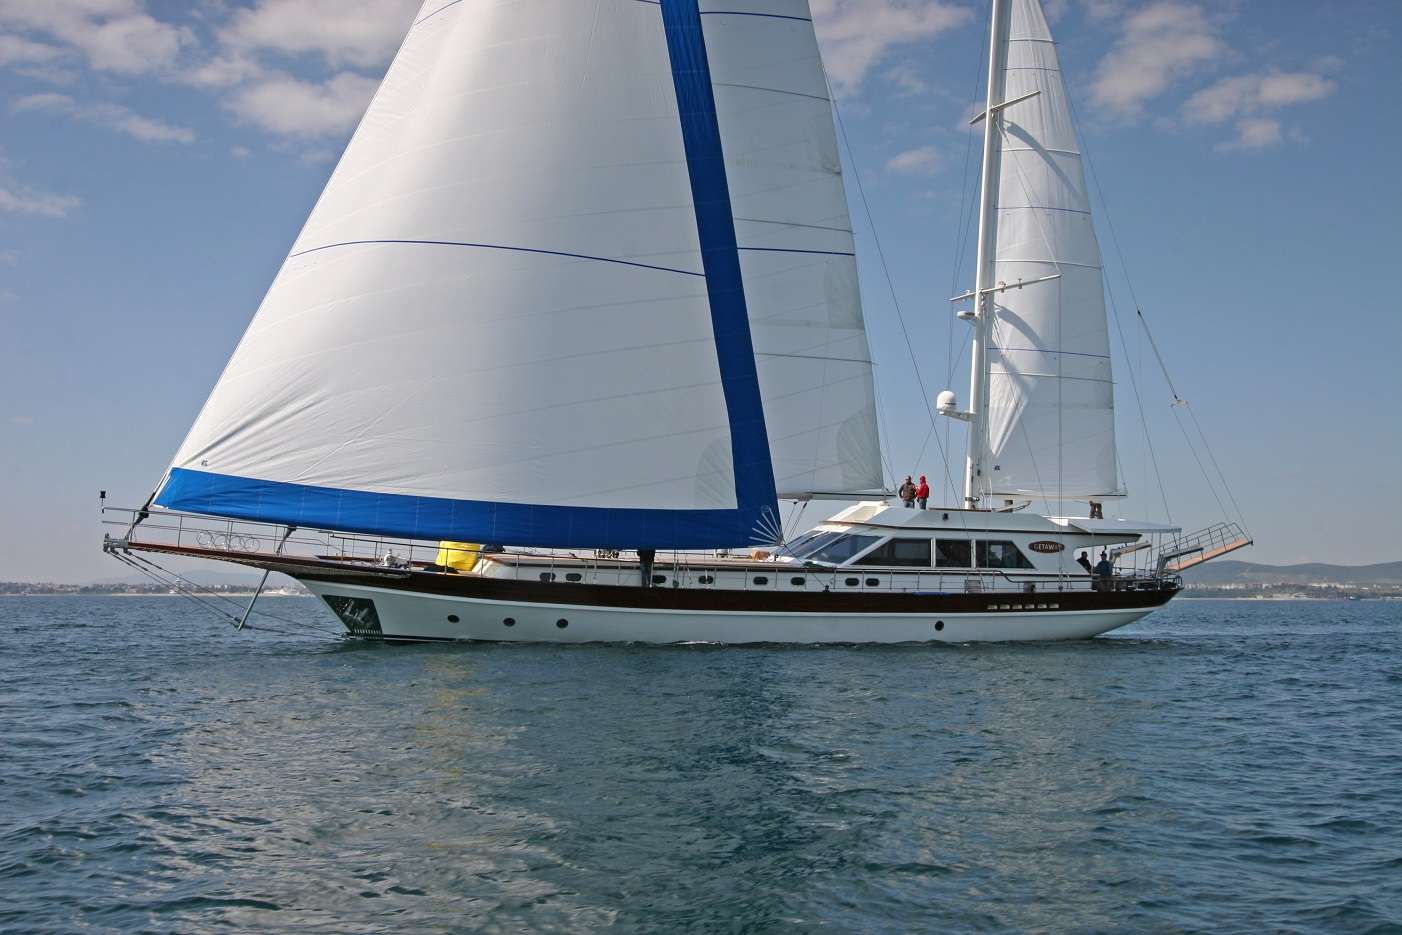 GETAWAY Yacht Charter - SAILING